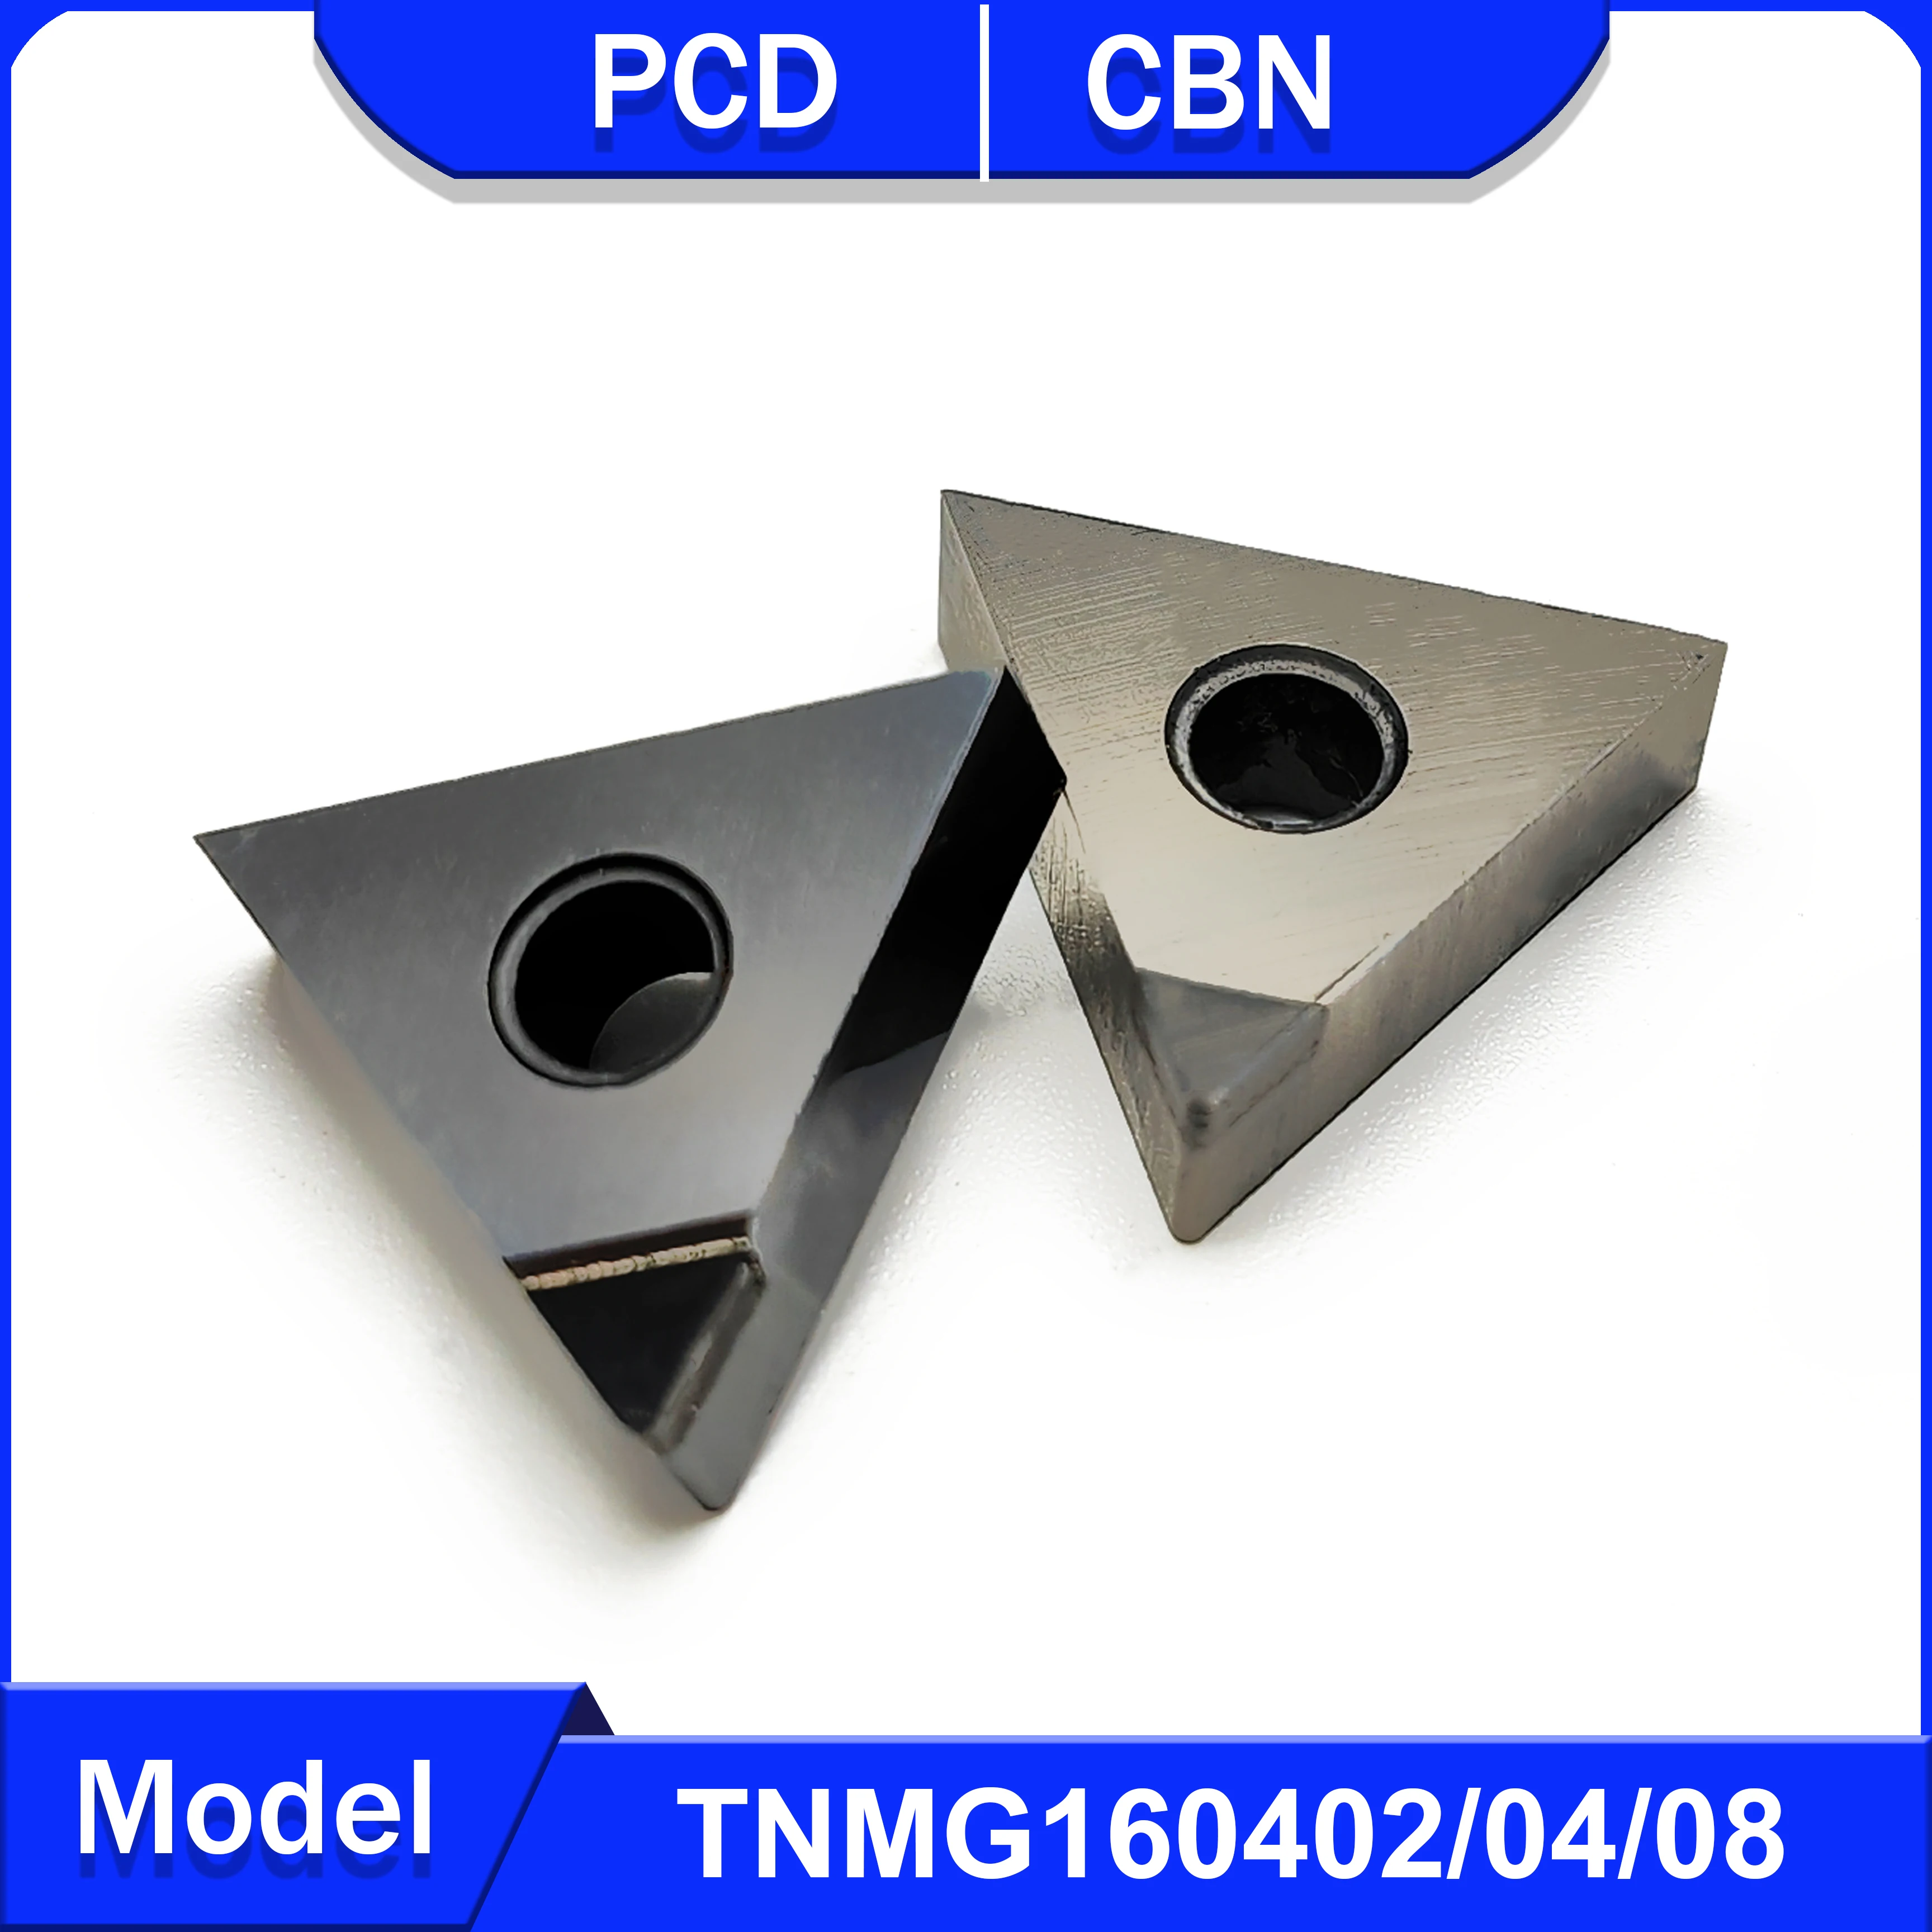 

2PCS PCD turning tool TNMG160402 TNMG160404 TNMG160408 for copper and aluminum CBN tools machining hard steel and cast iron TNMG